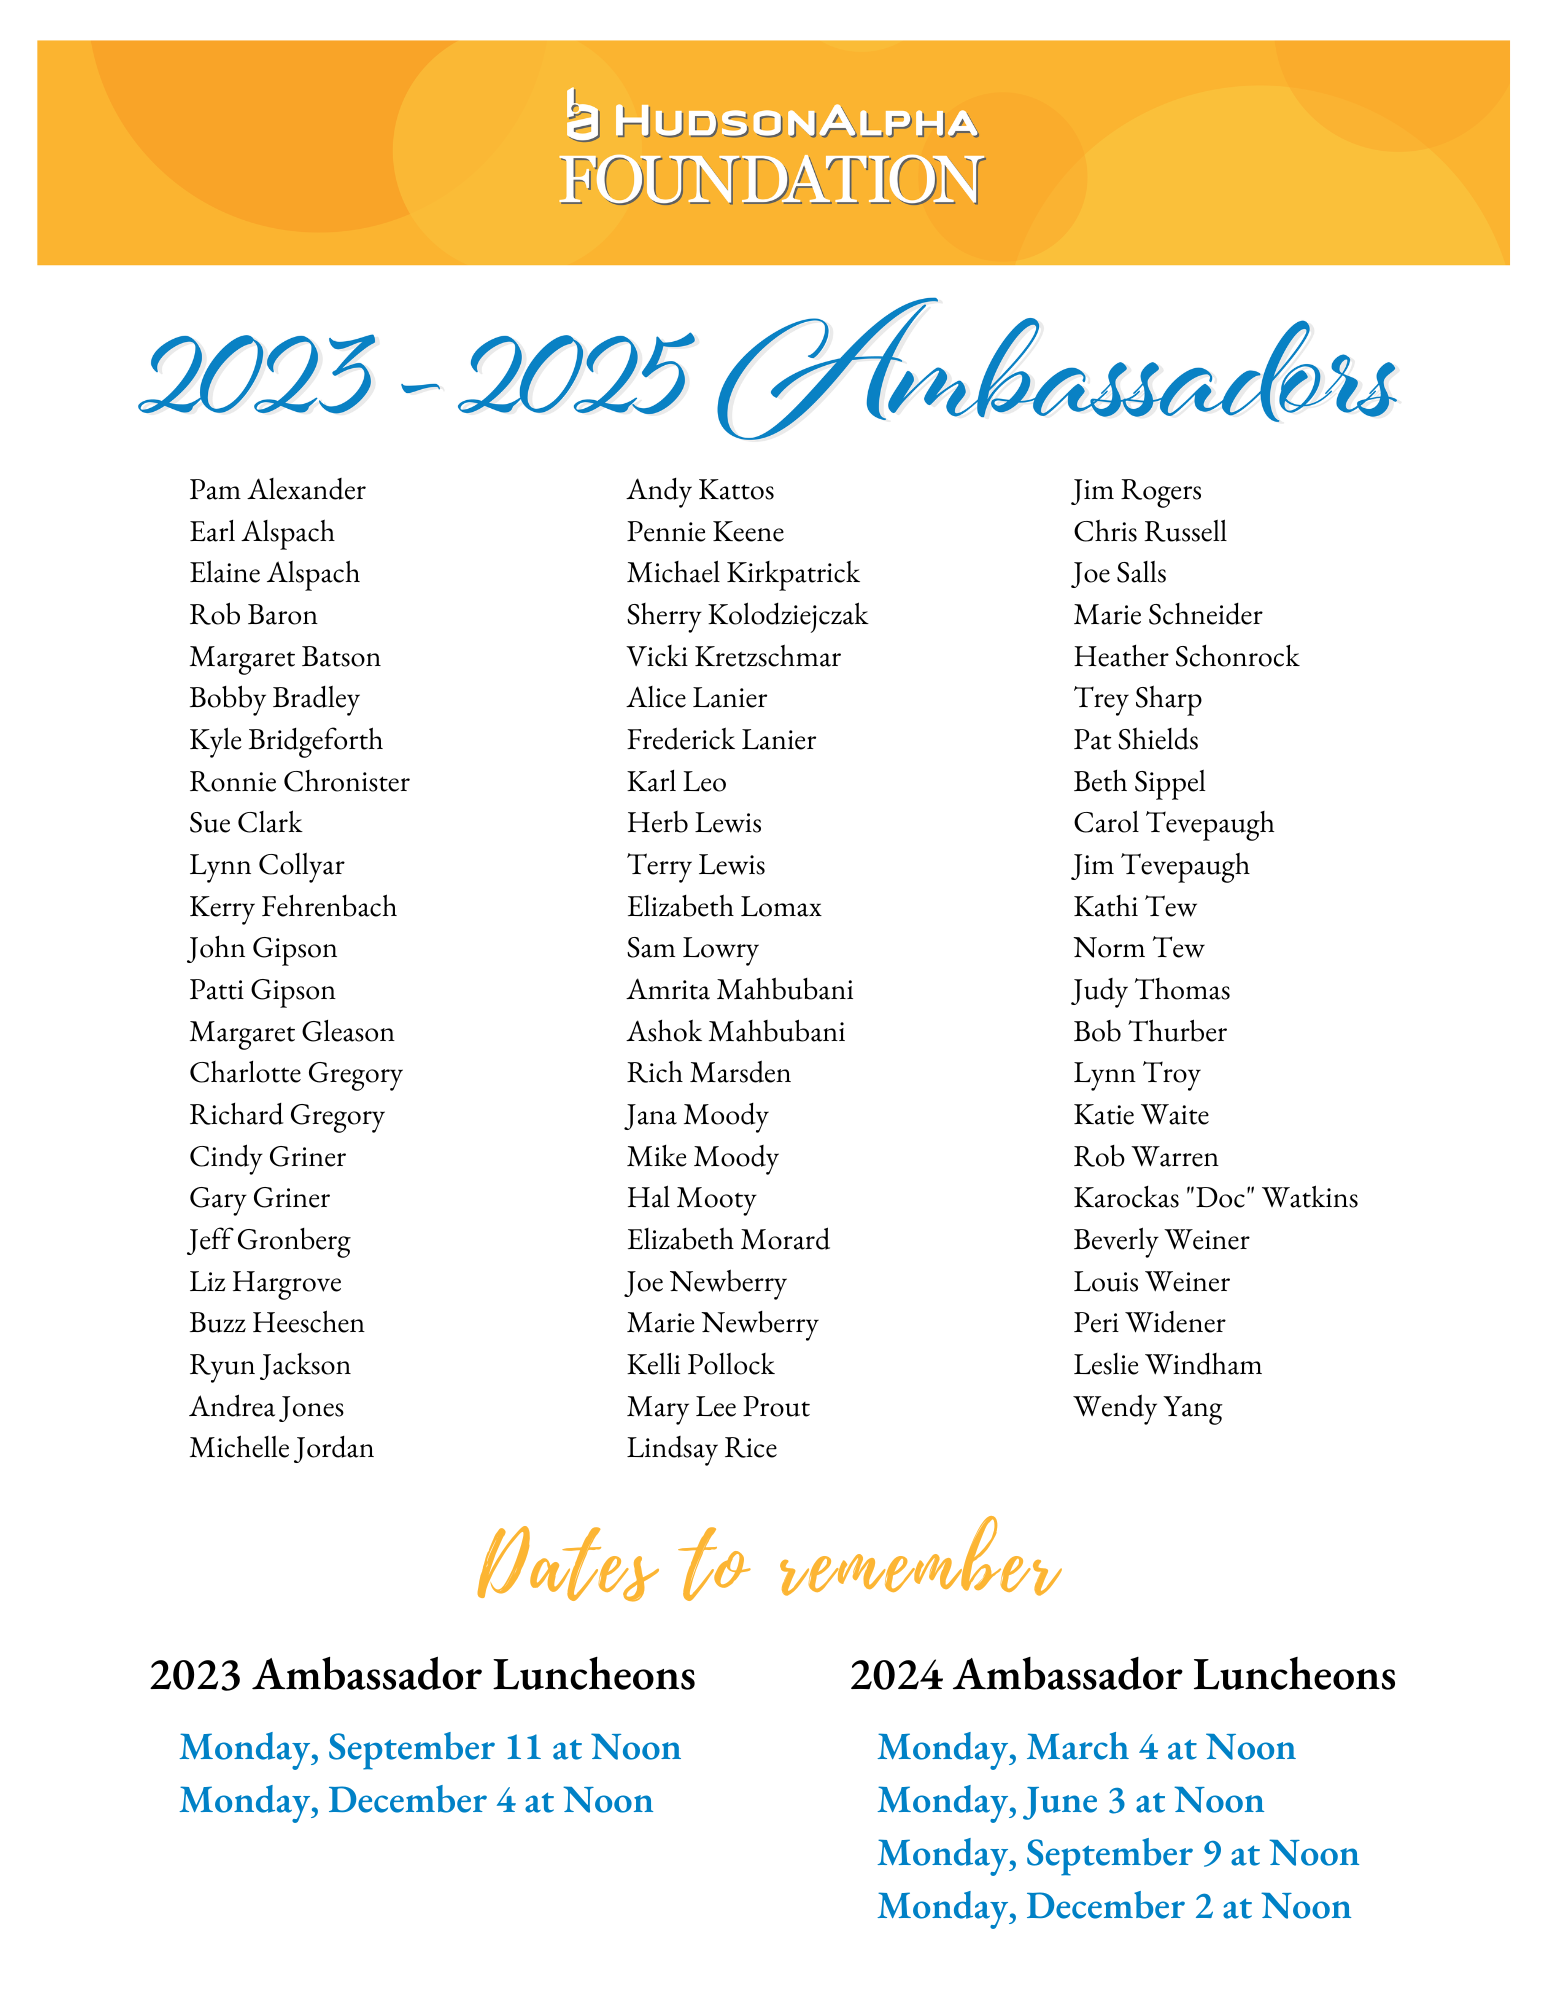 2023 - 2025 HudsonAlpha Foundation members list